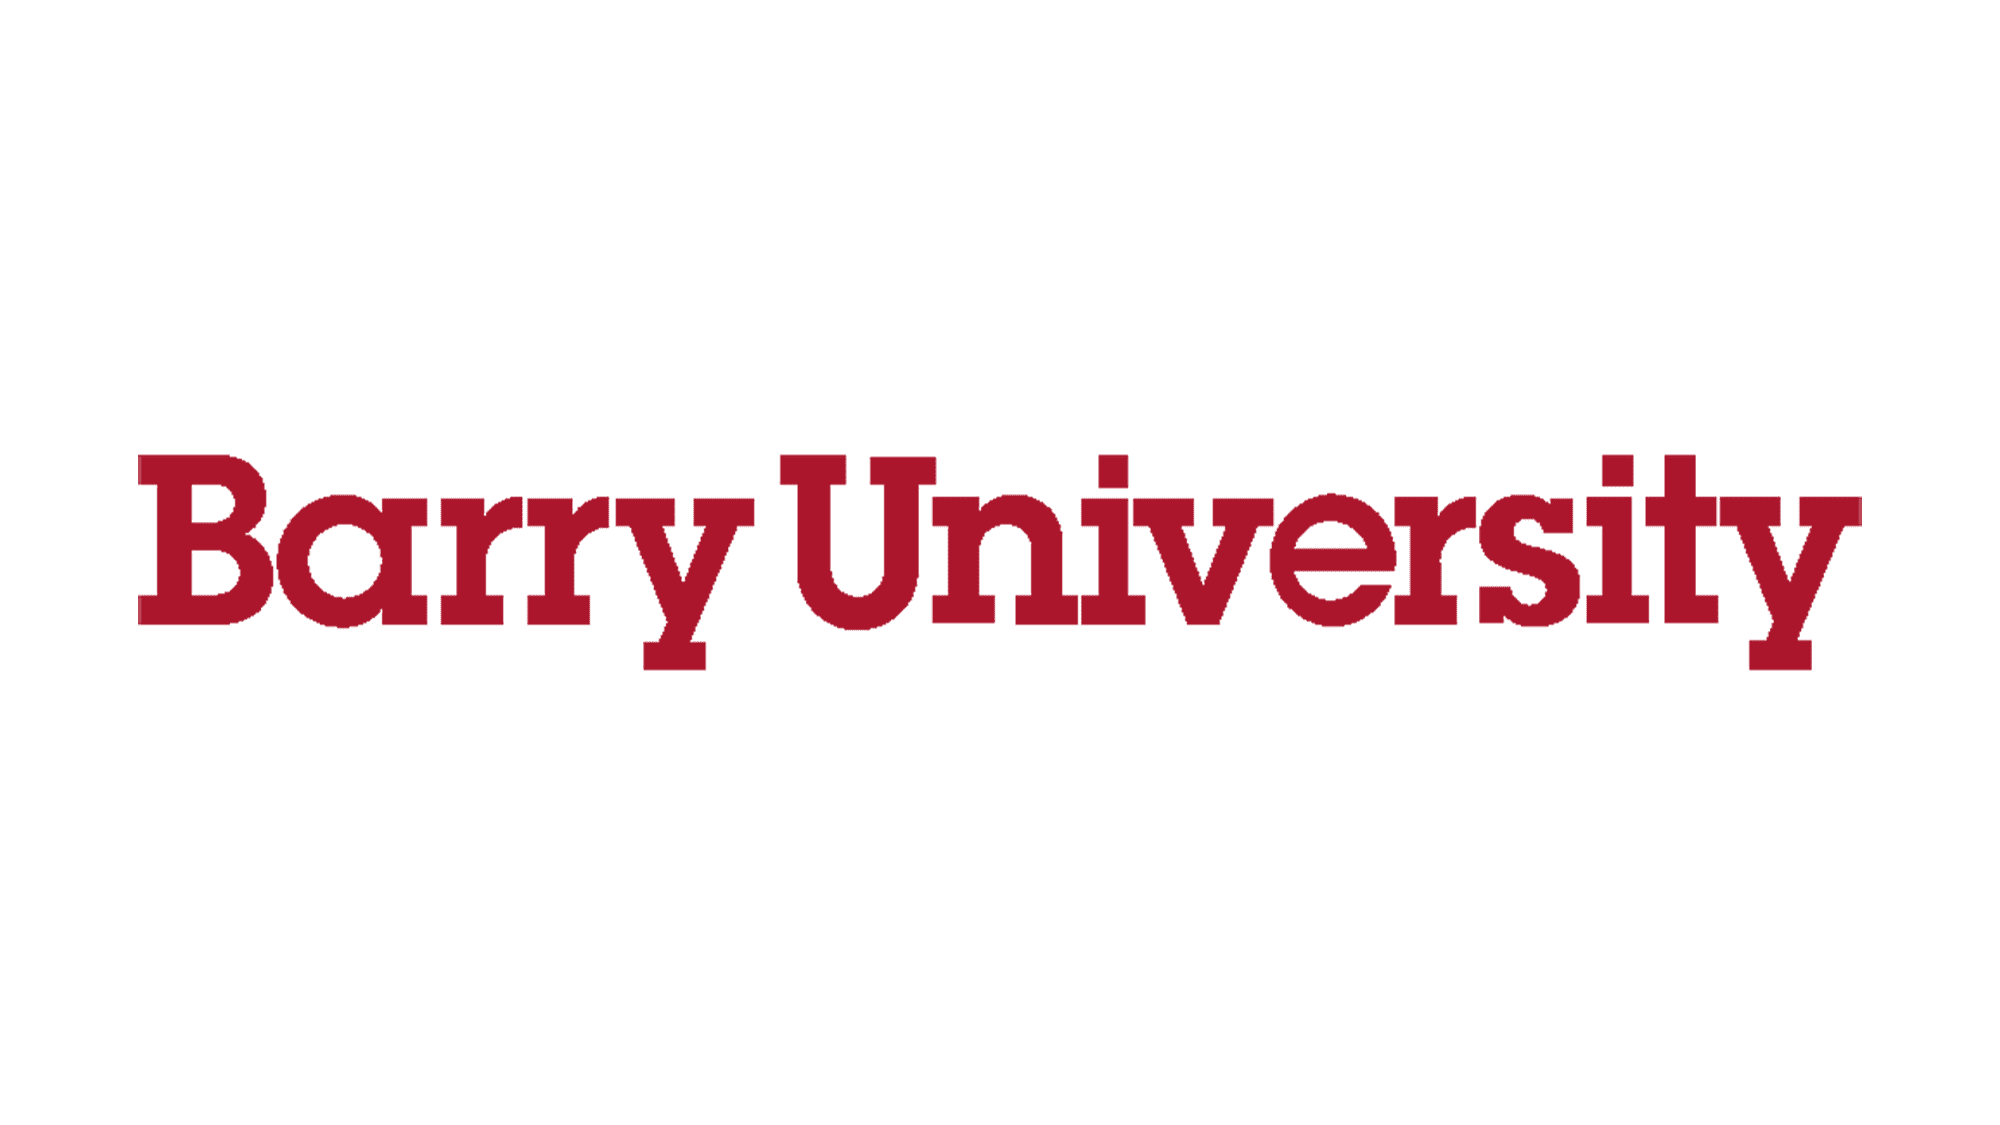 Barry University Logo Logo